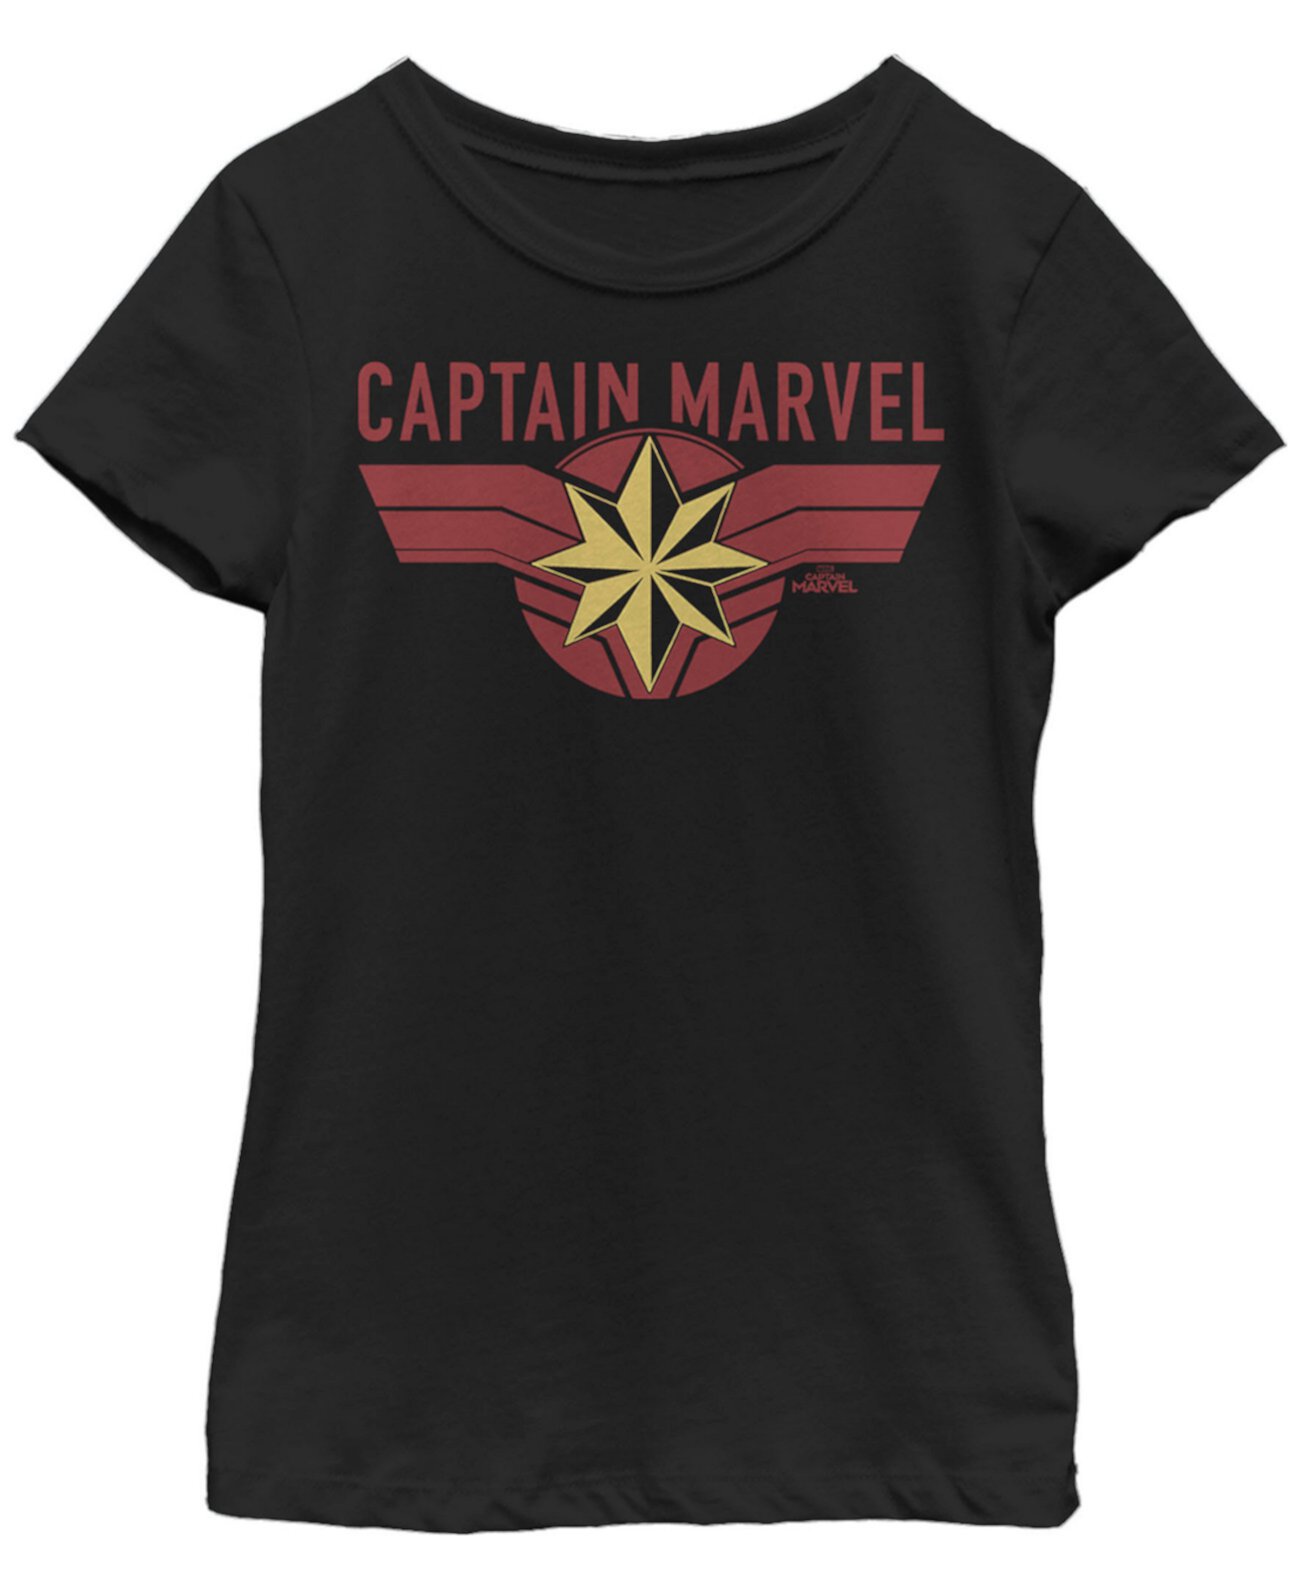 Marvel Big Girl's Капитан Marvel Золотая футболка с изображением звезды и короткими рукавами FIFTH SUN